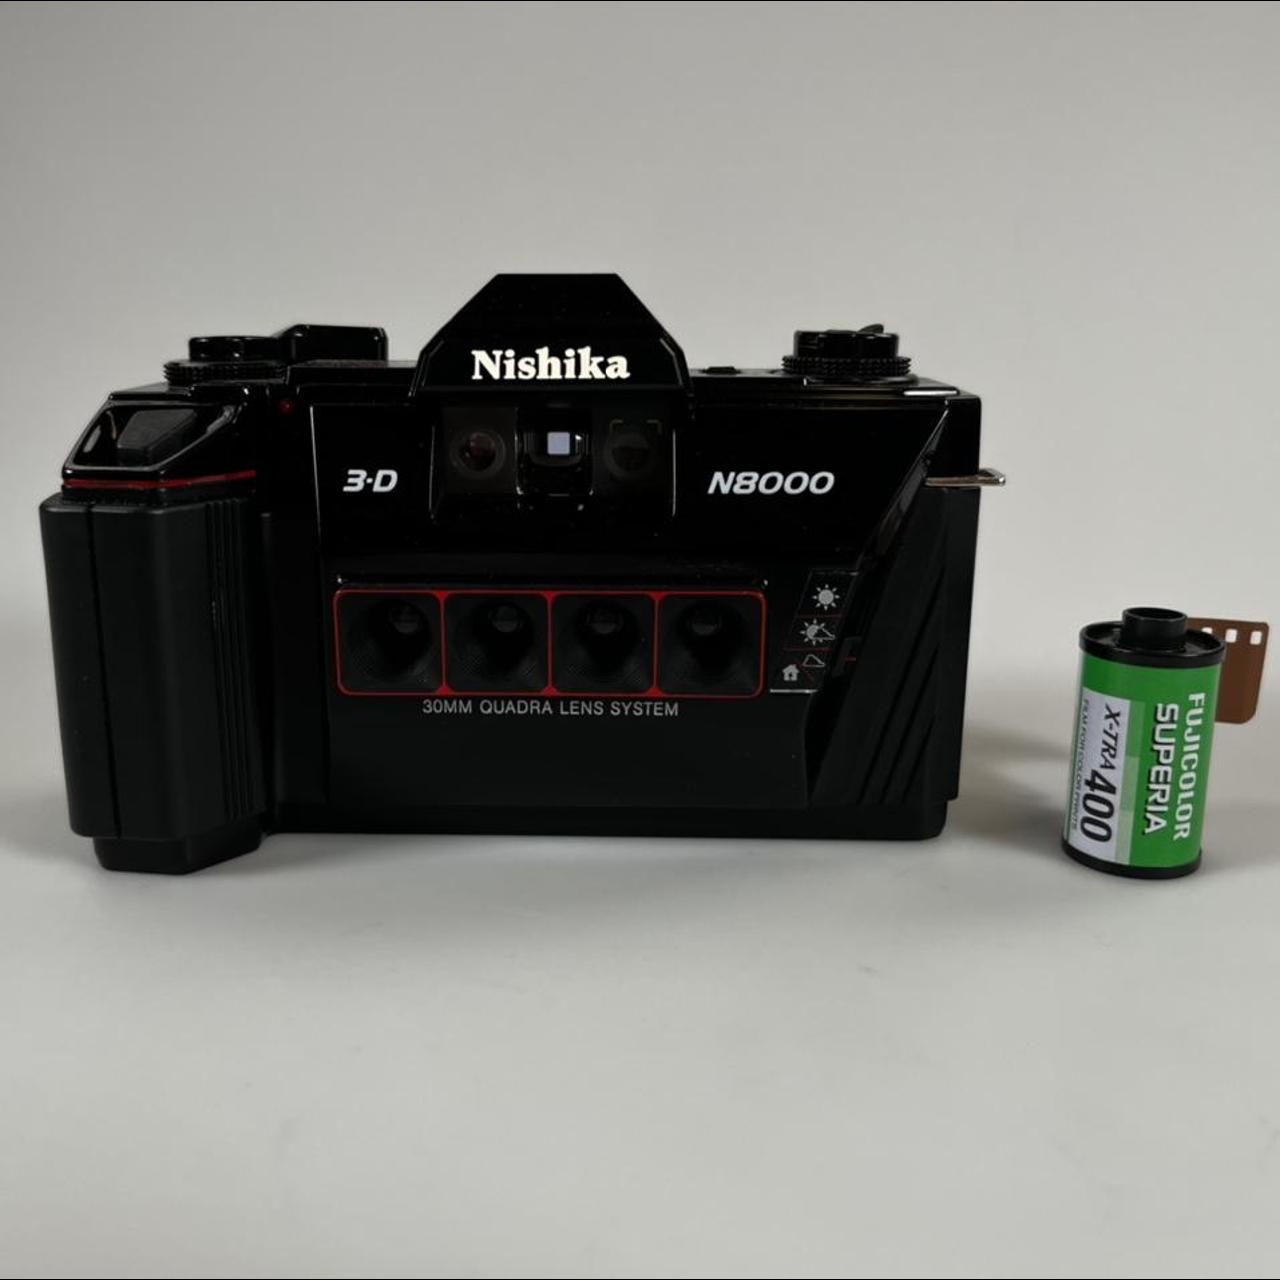 Product Image 1 - Nishika N8000 3D Film Camera

Mint